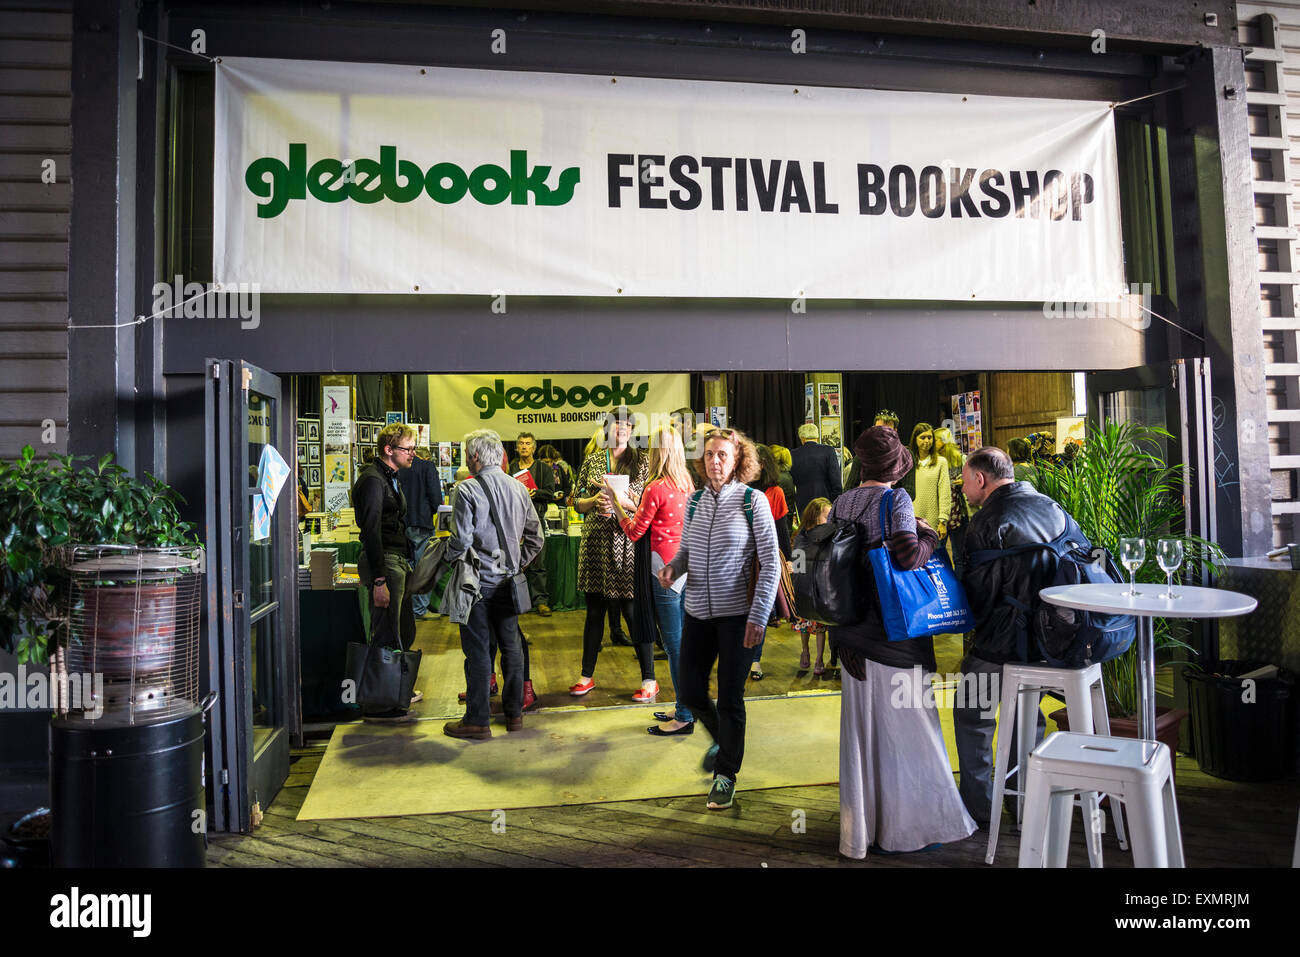 Sydney Writers' Festival, Walsh Bay Precinct, Gleeb Books, Festival Bookshop, Sydney, Australia Stock Photo